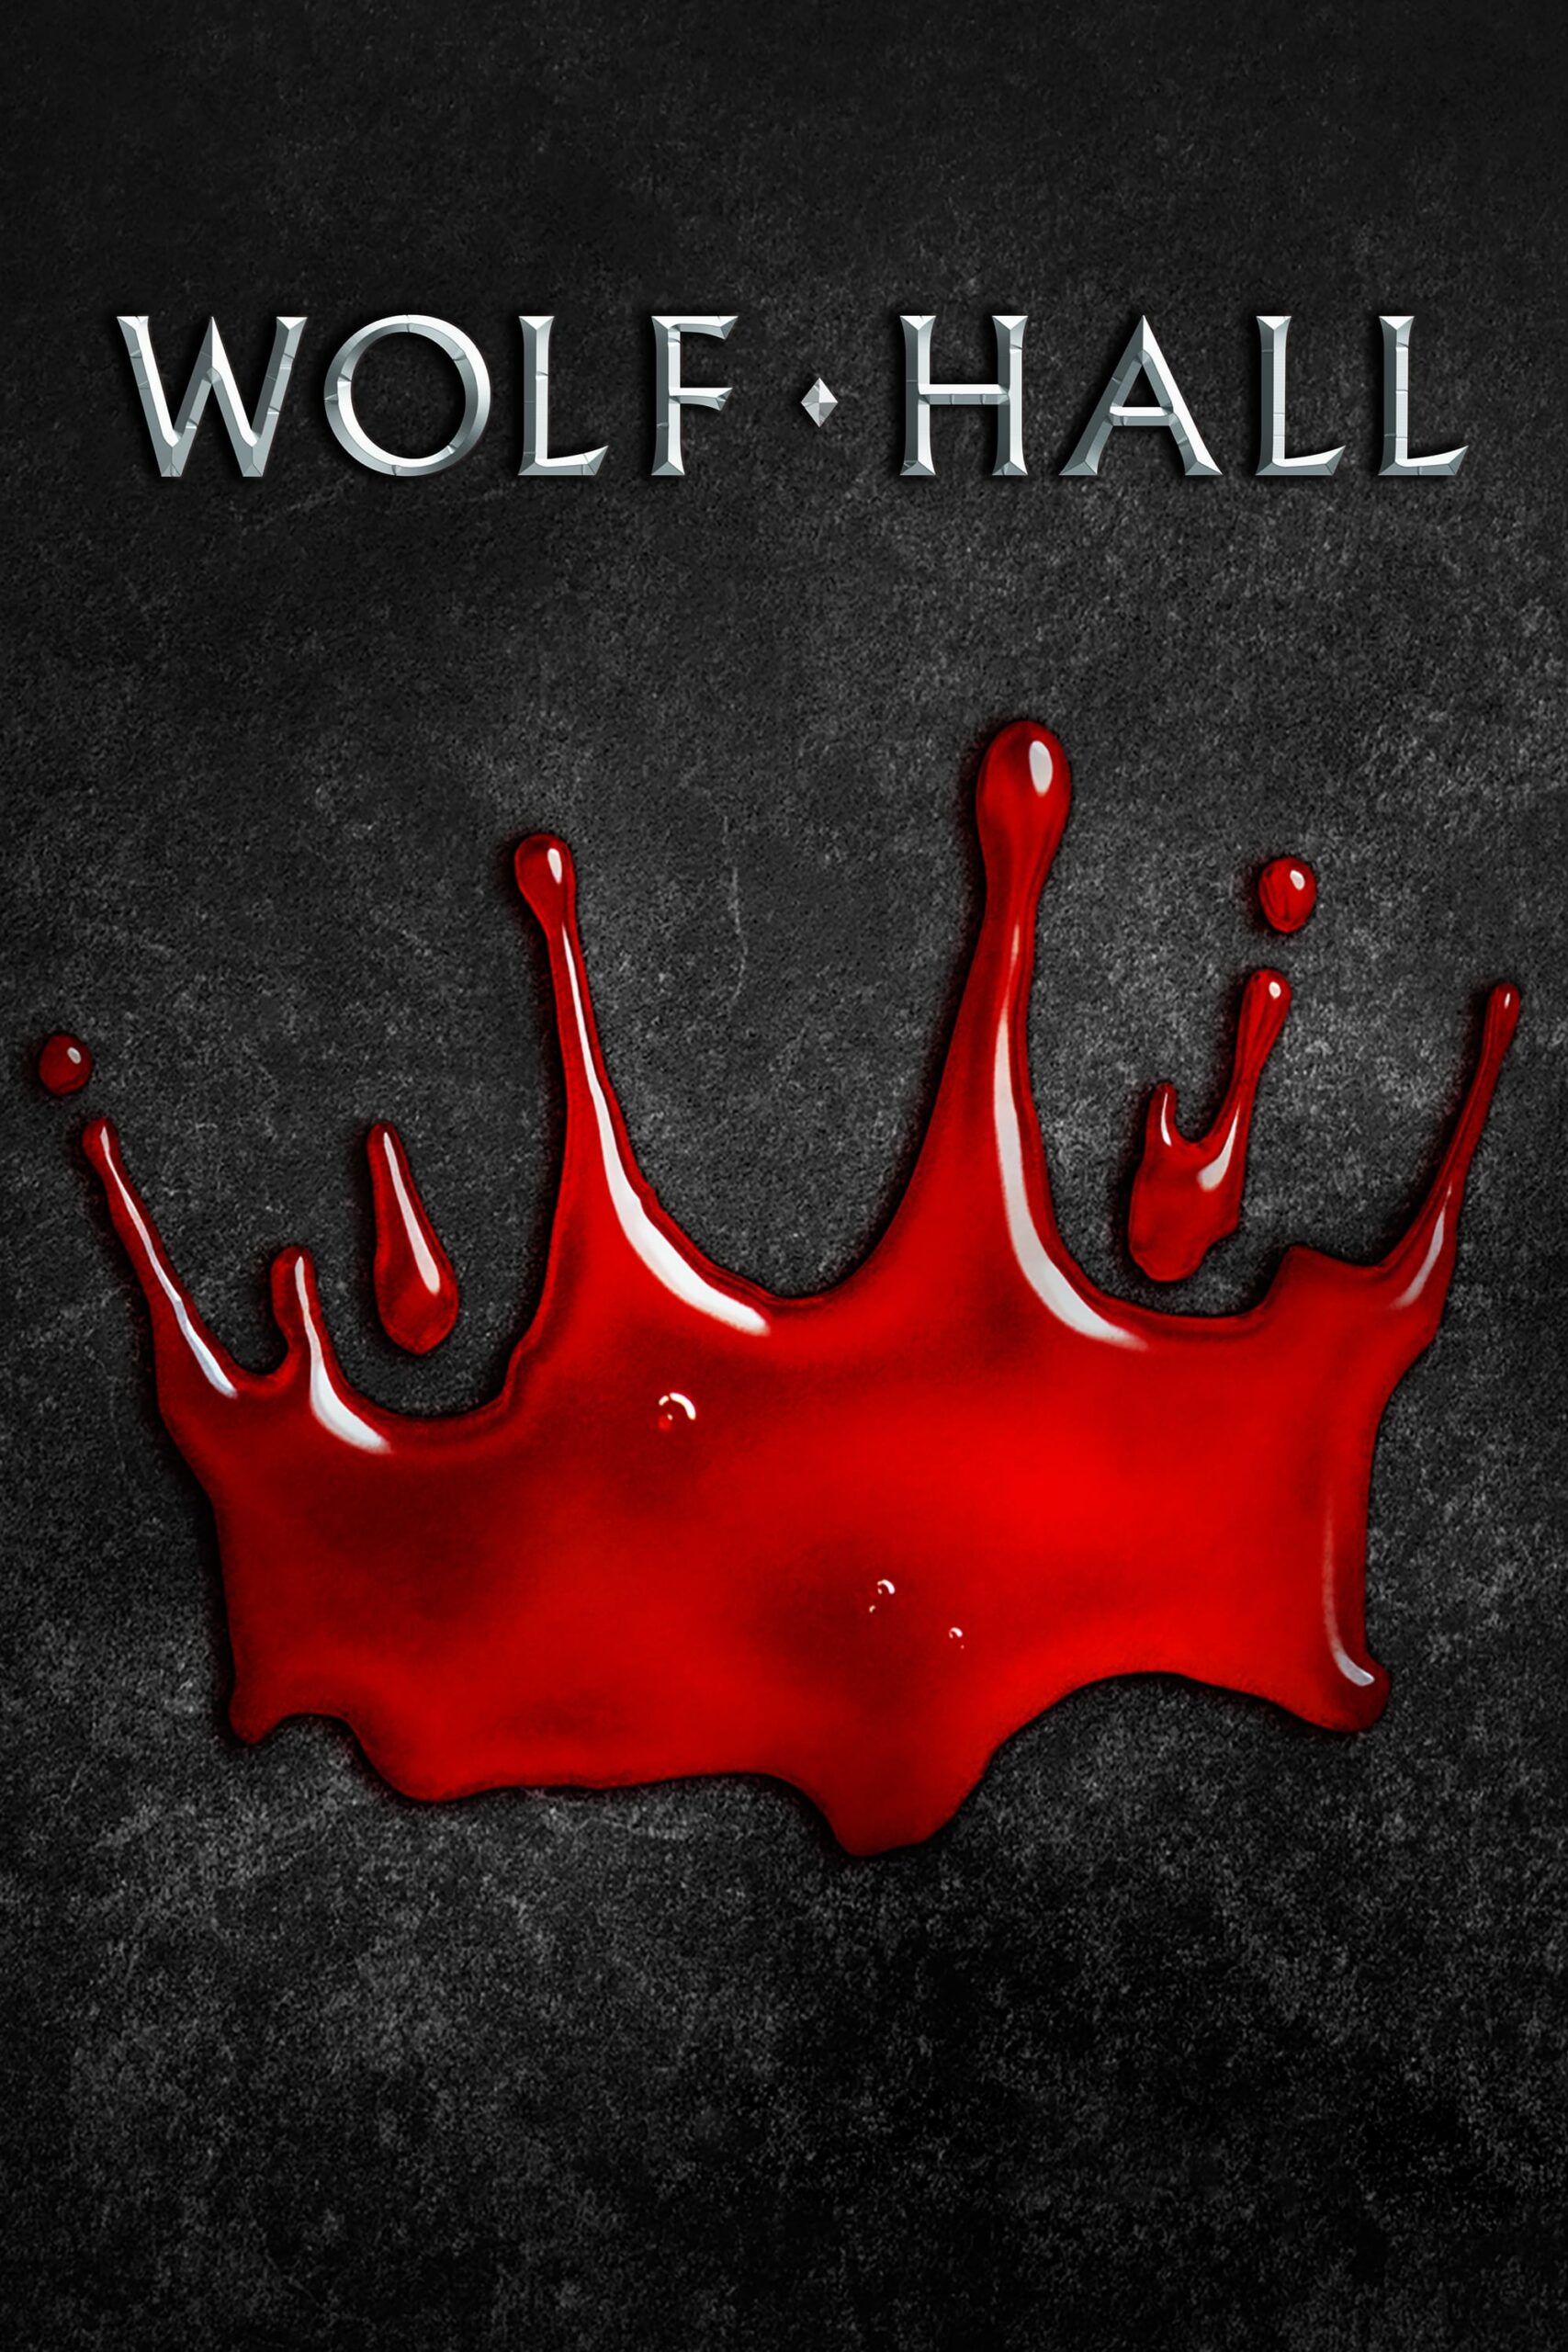 Plakát pro film “Wolf Hall”